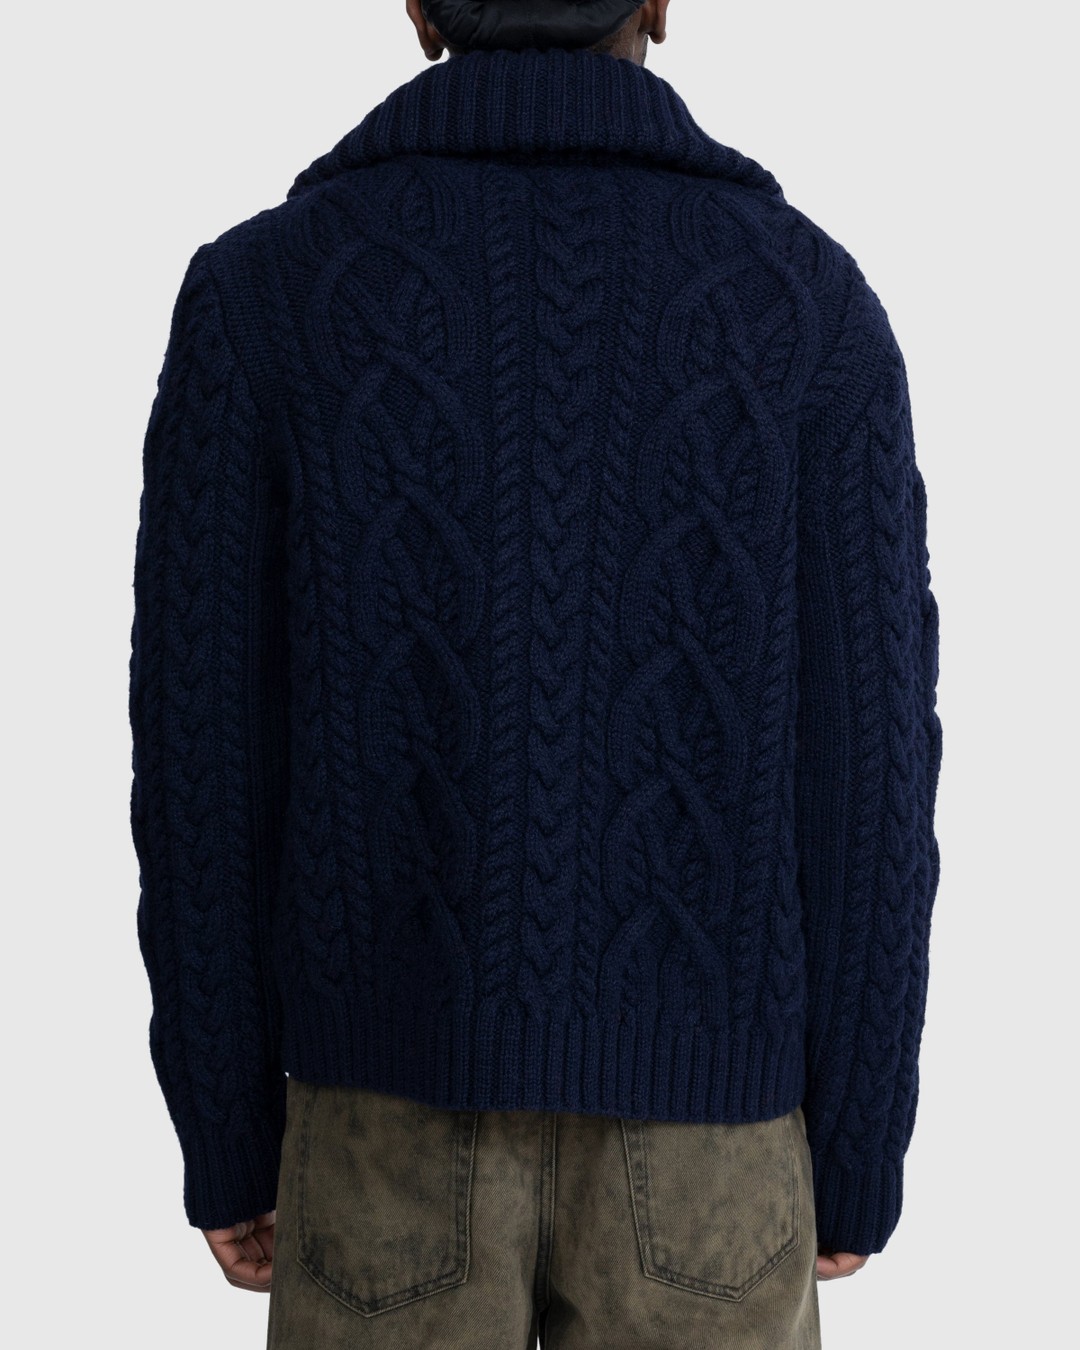 Dries van Noten – Naldo Cardigan Blue - Knitwear - Blue - Image 4